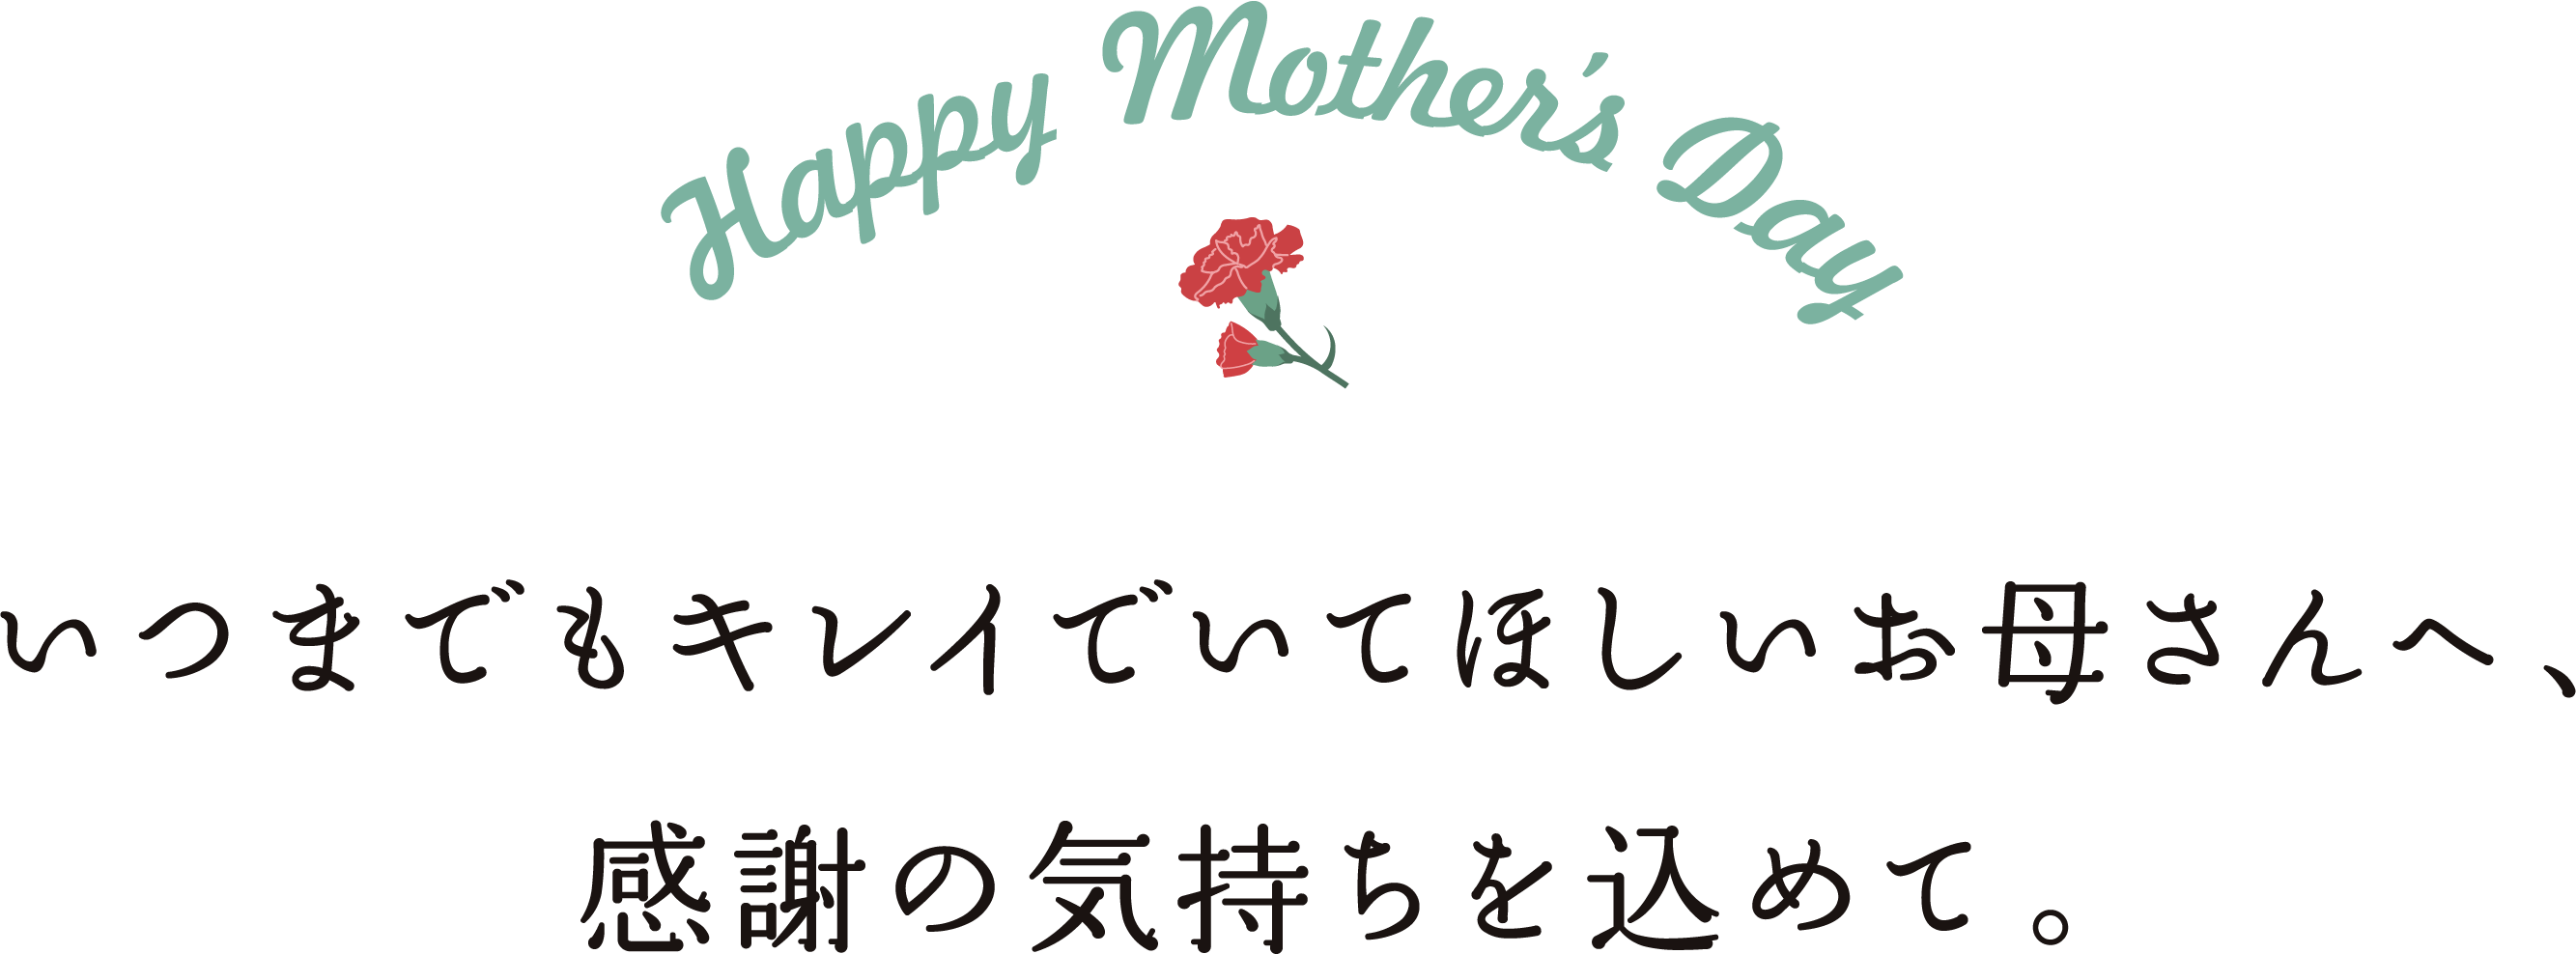 Happy Mothers Day いつまでもキレイに輝いてほしいお母さんへ、感謝の気持ちを込めて。